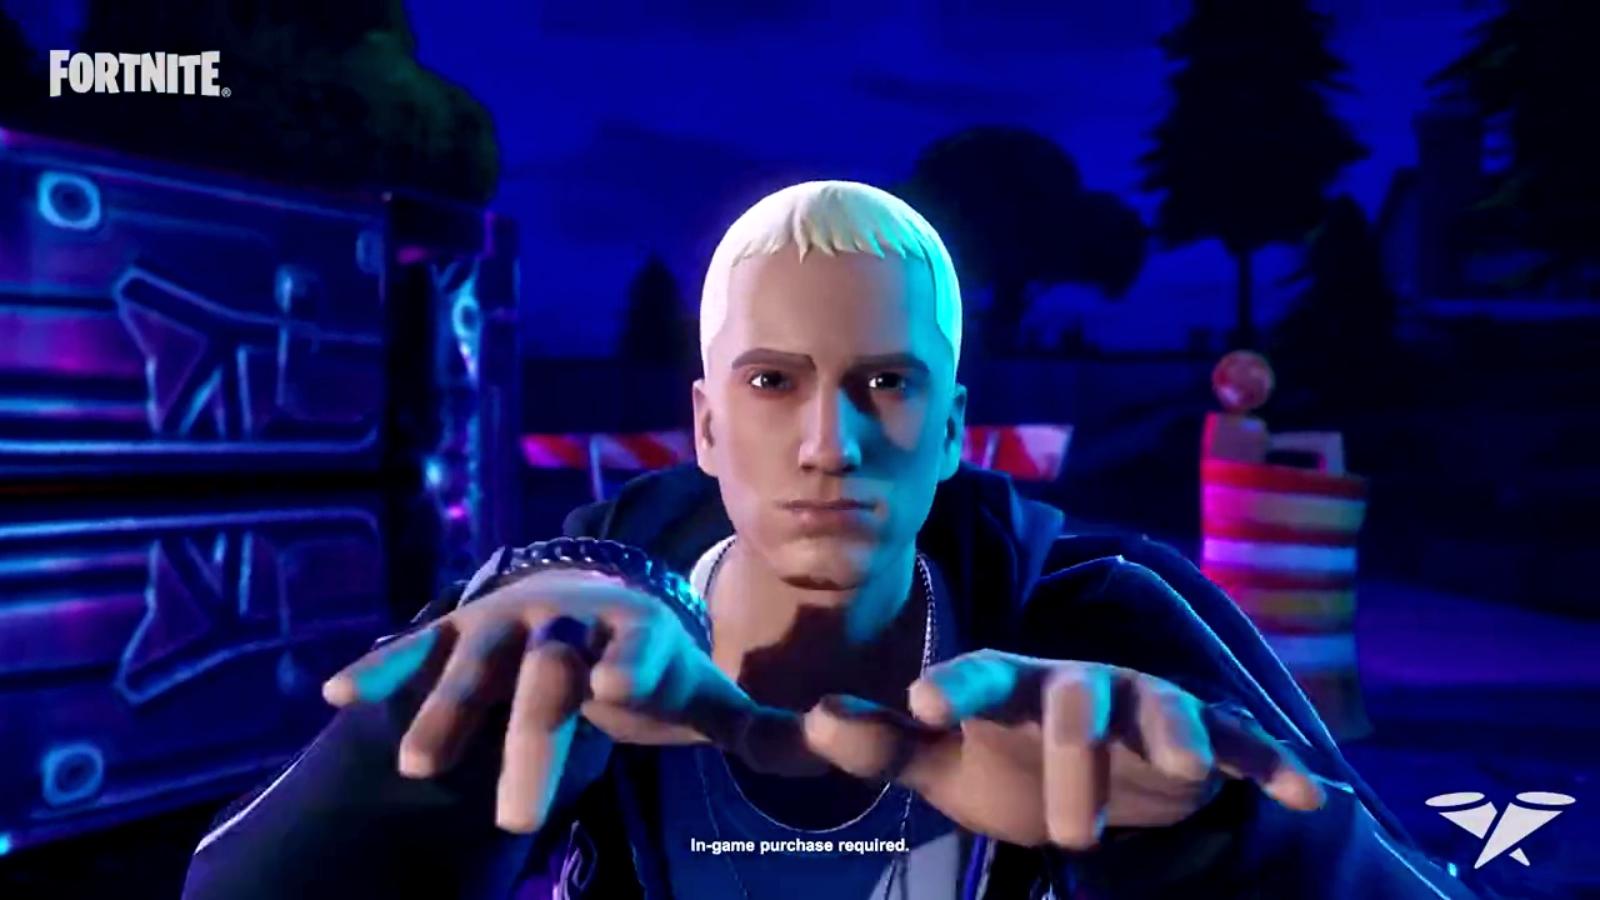 Eminem Slim Shady Fortnite emote